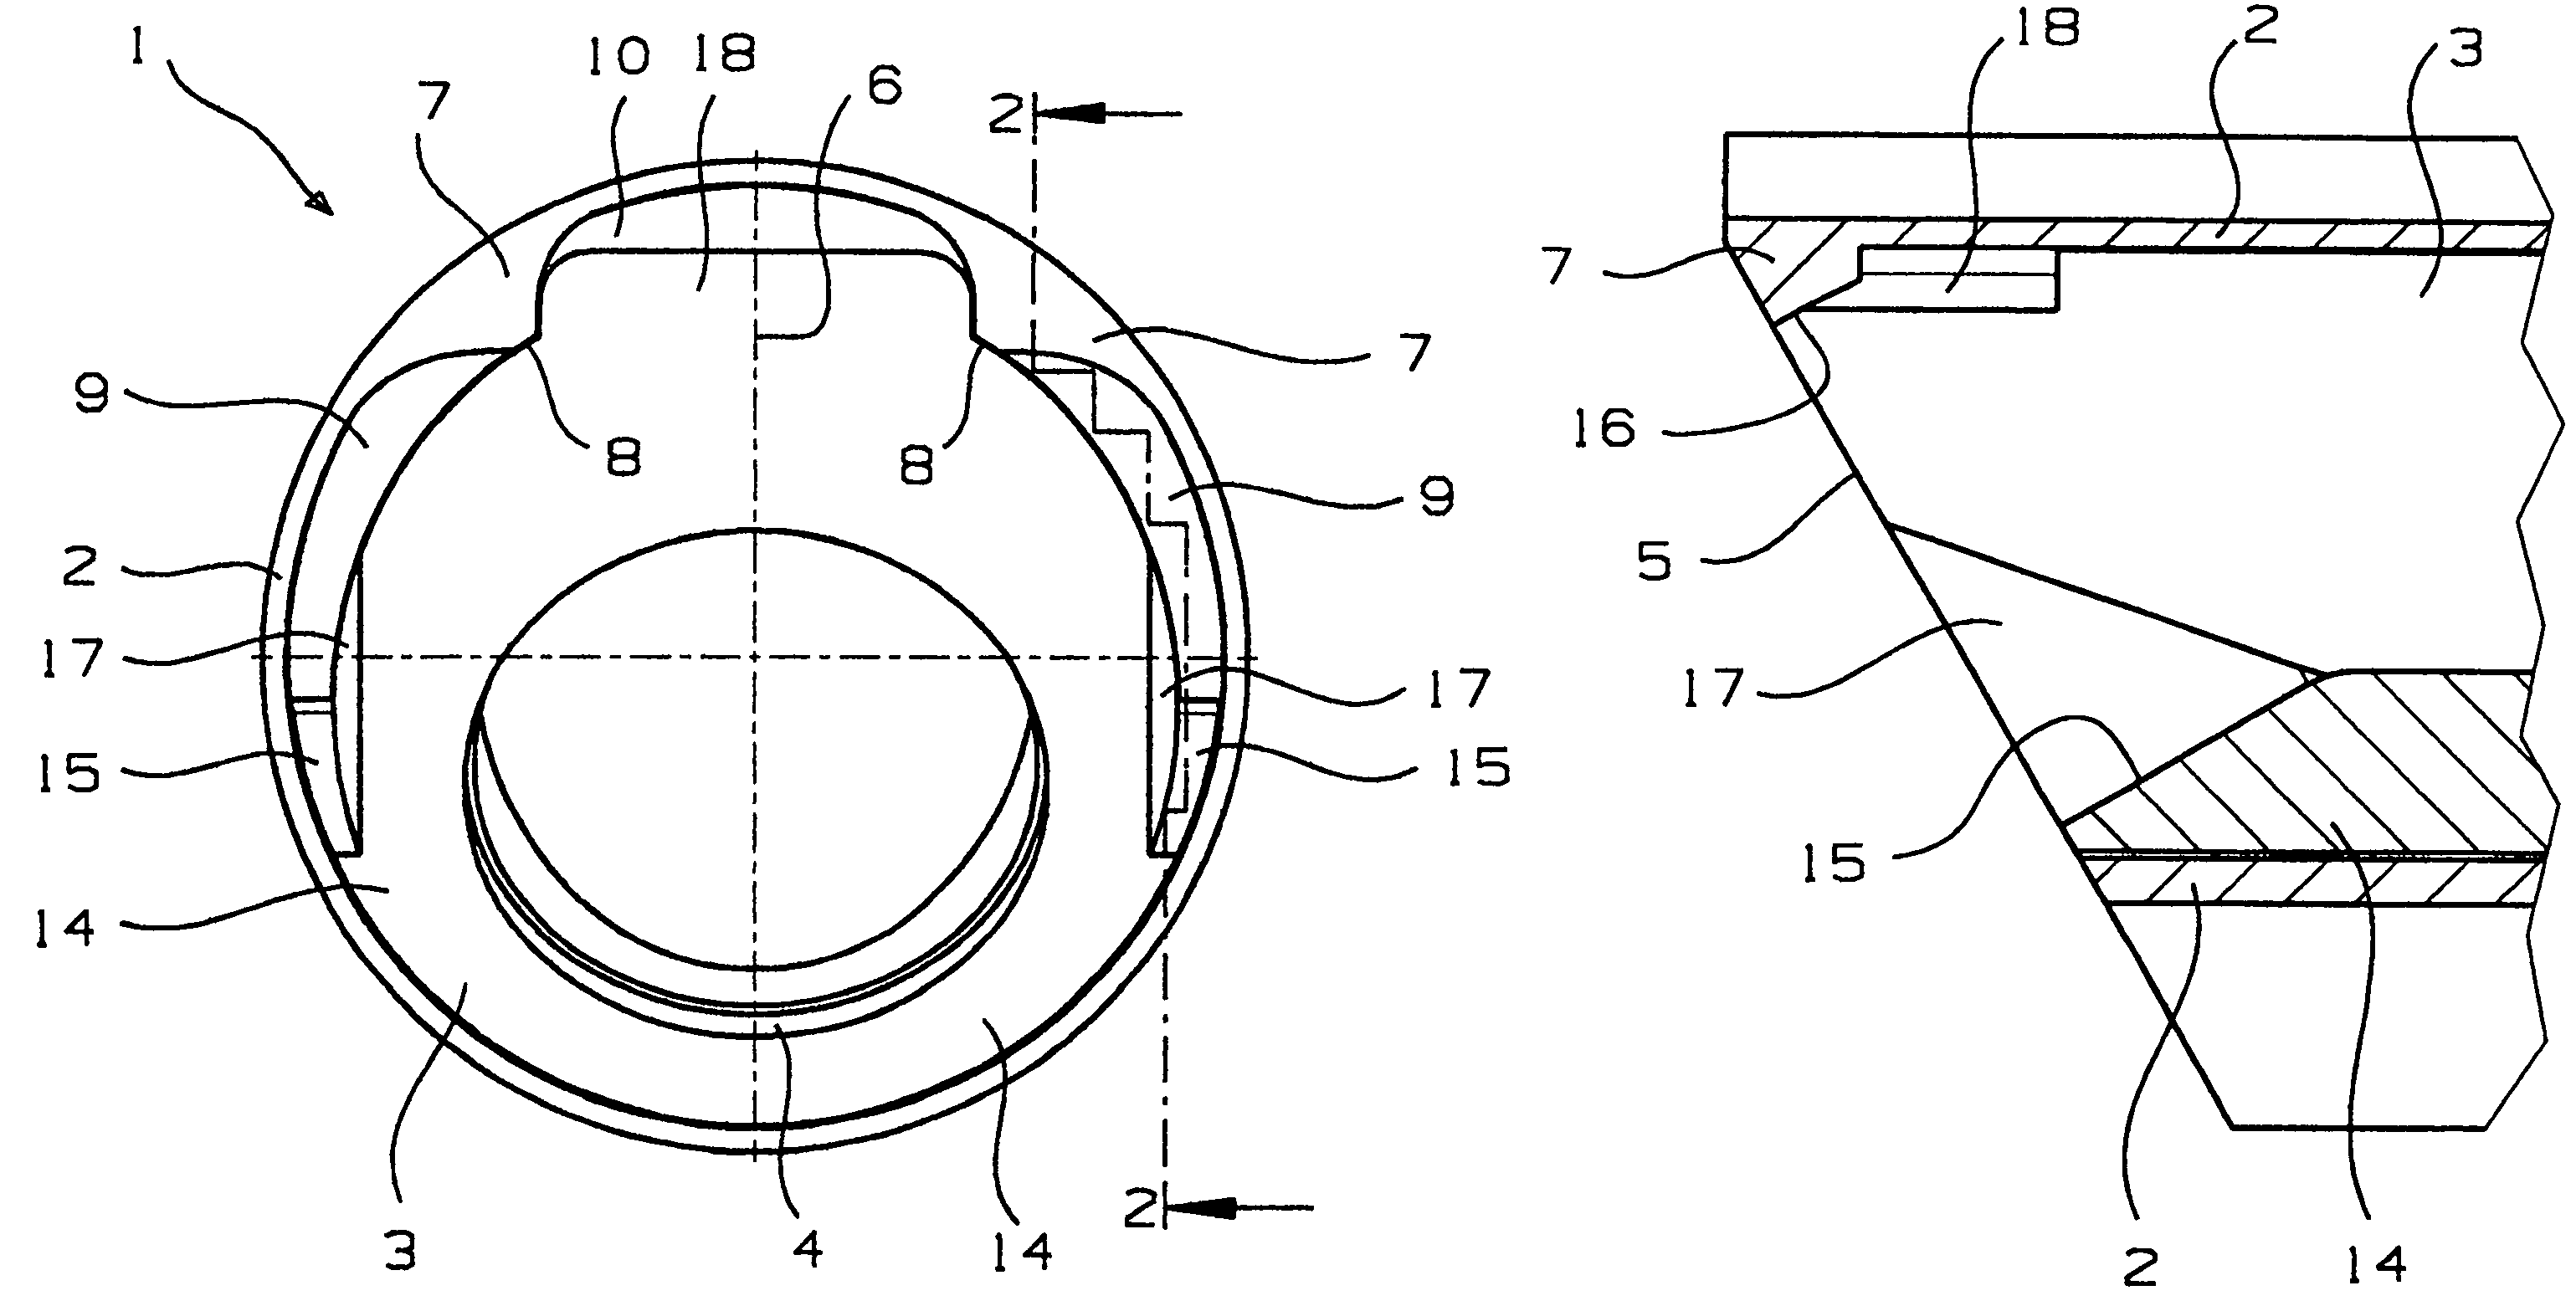 Endoscope optics with a lateral optic-fiber bundle